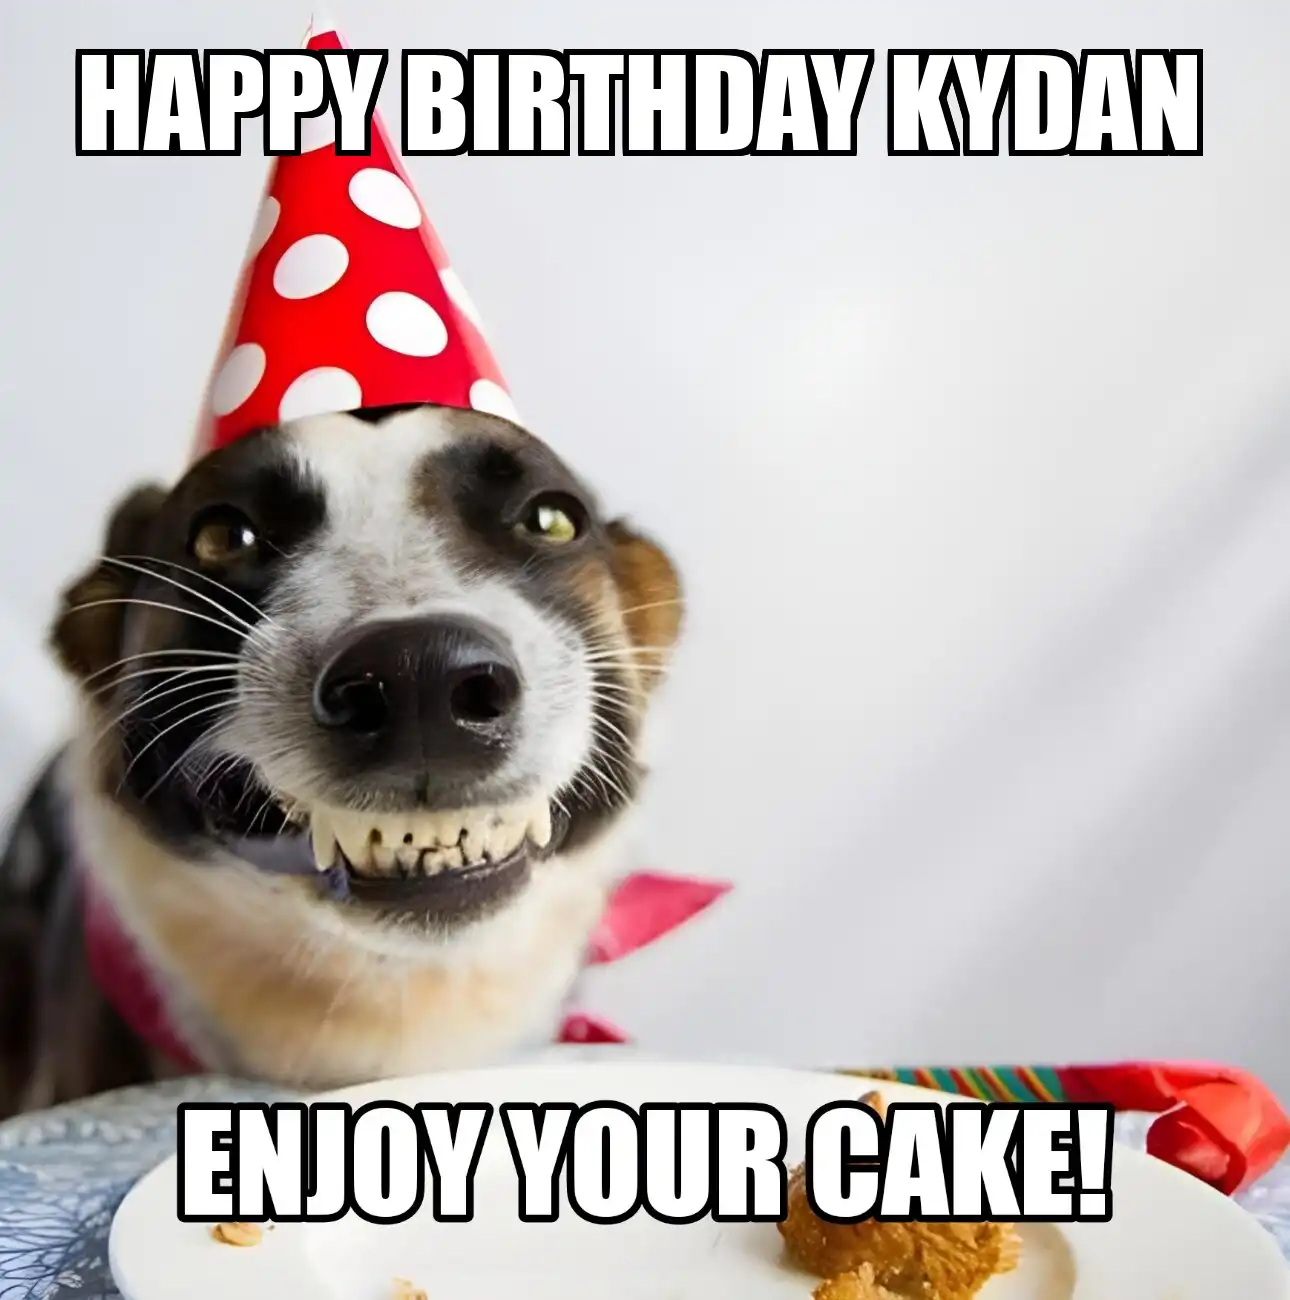 Happy Birthday Kydan Enjoy Your Cake Dog Meme